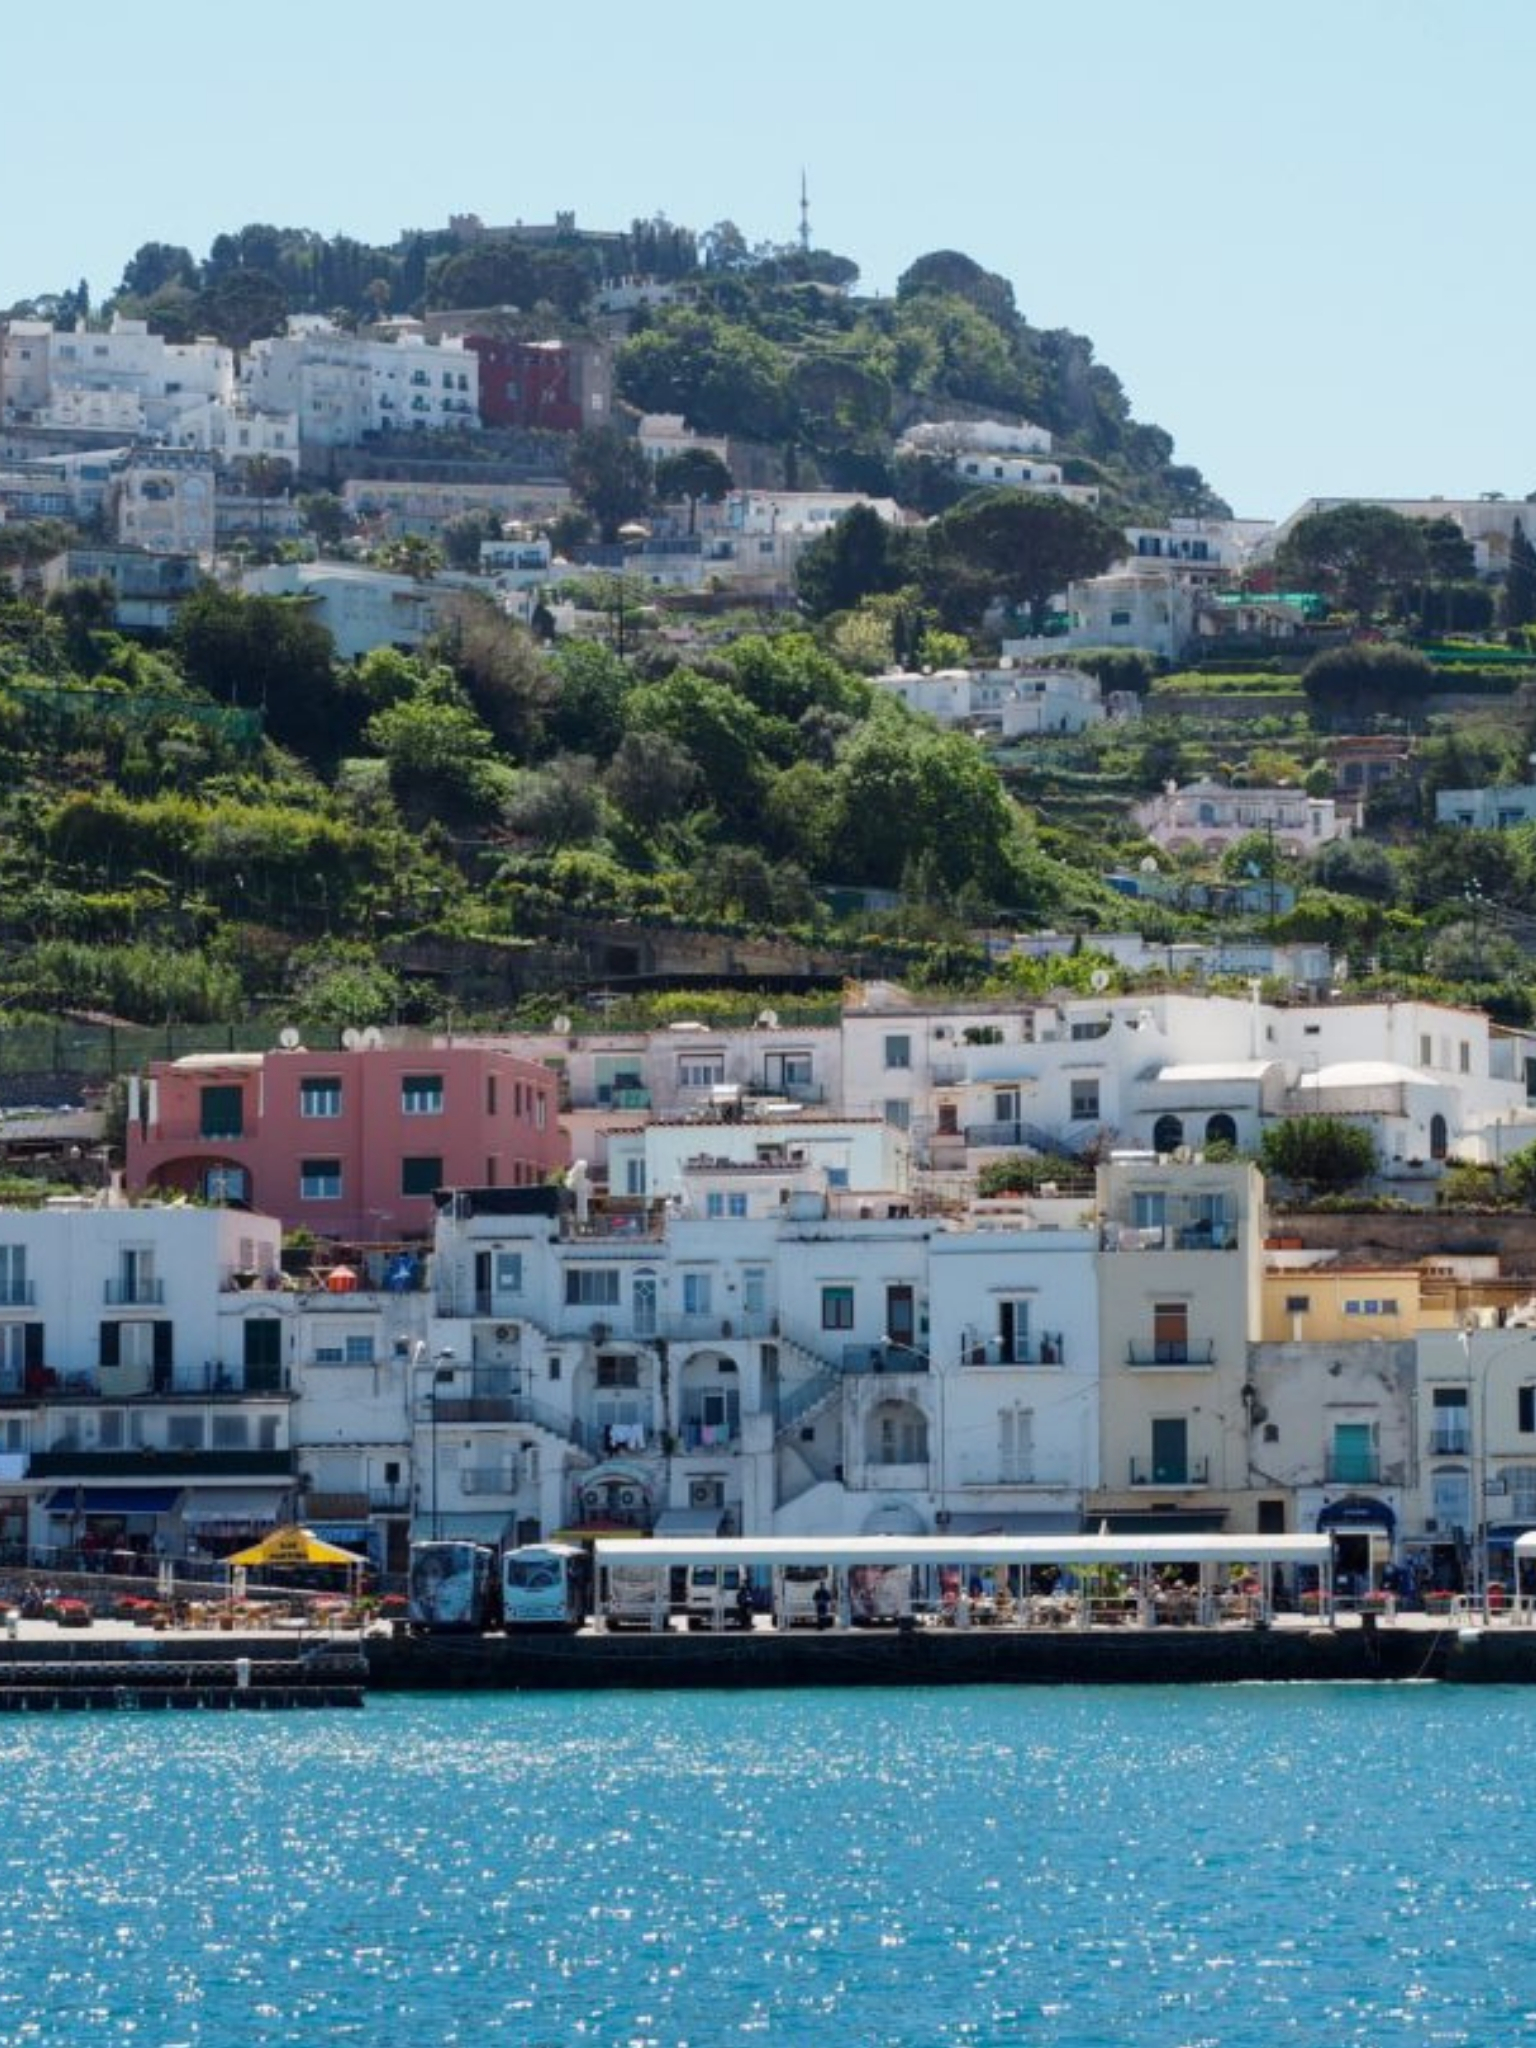 Renting a Vespa to explore the Amalfi Coast!